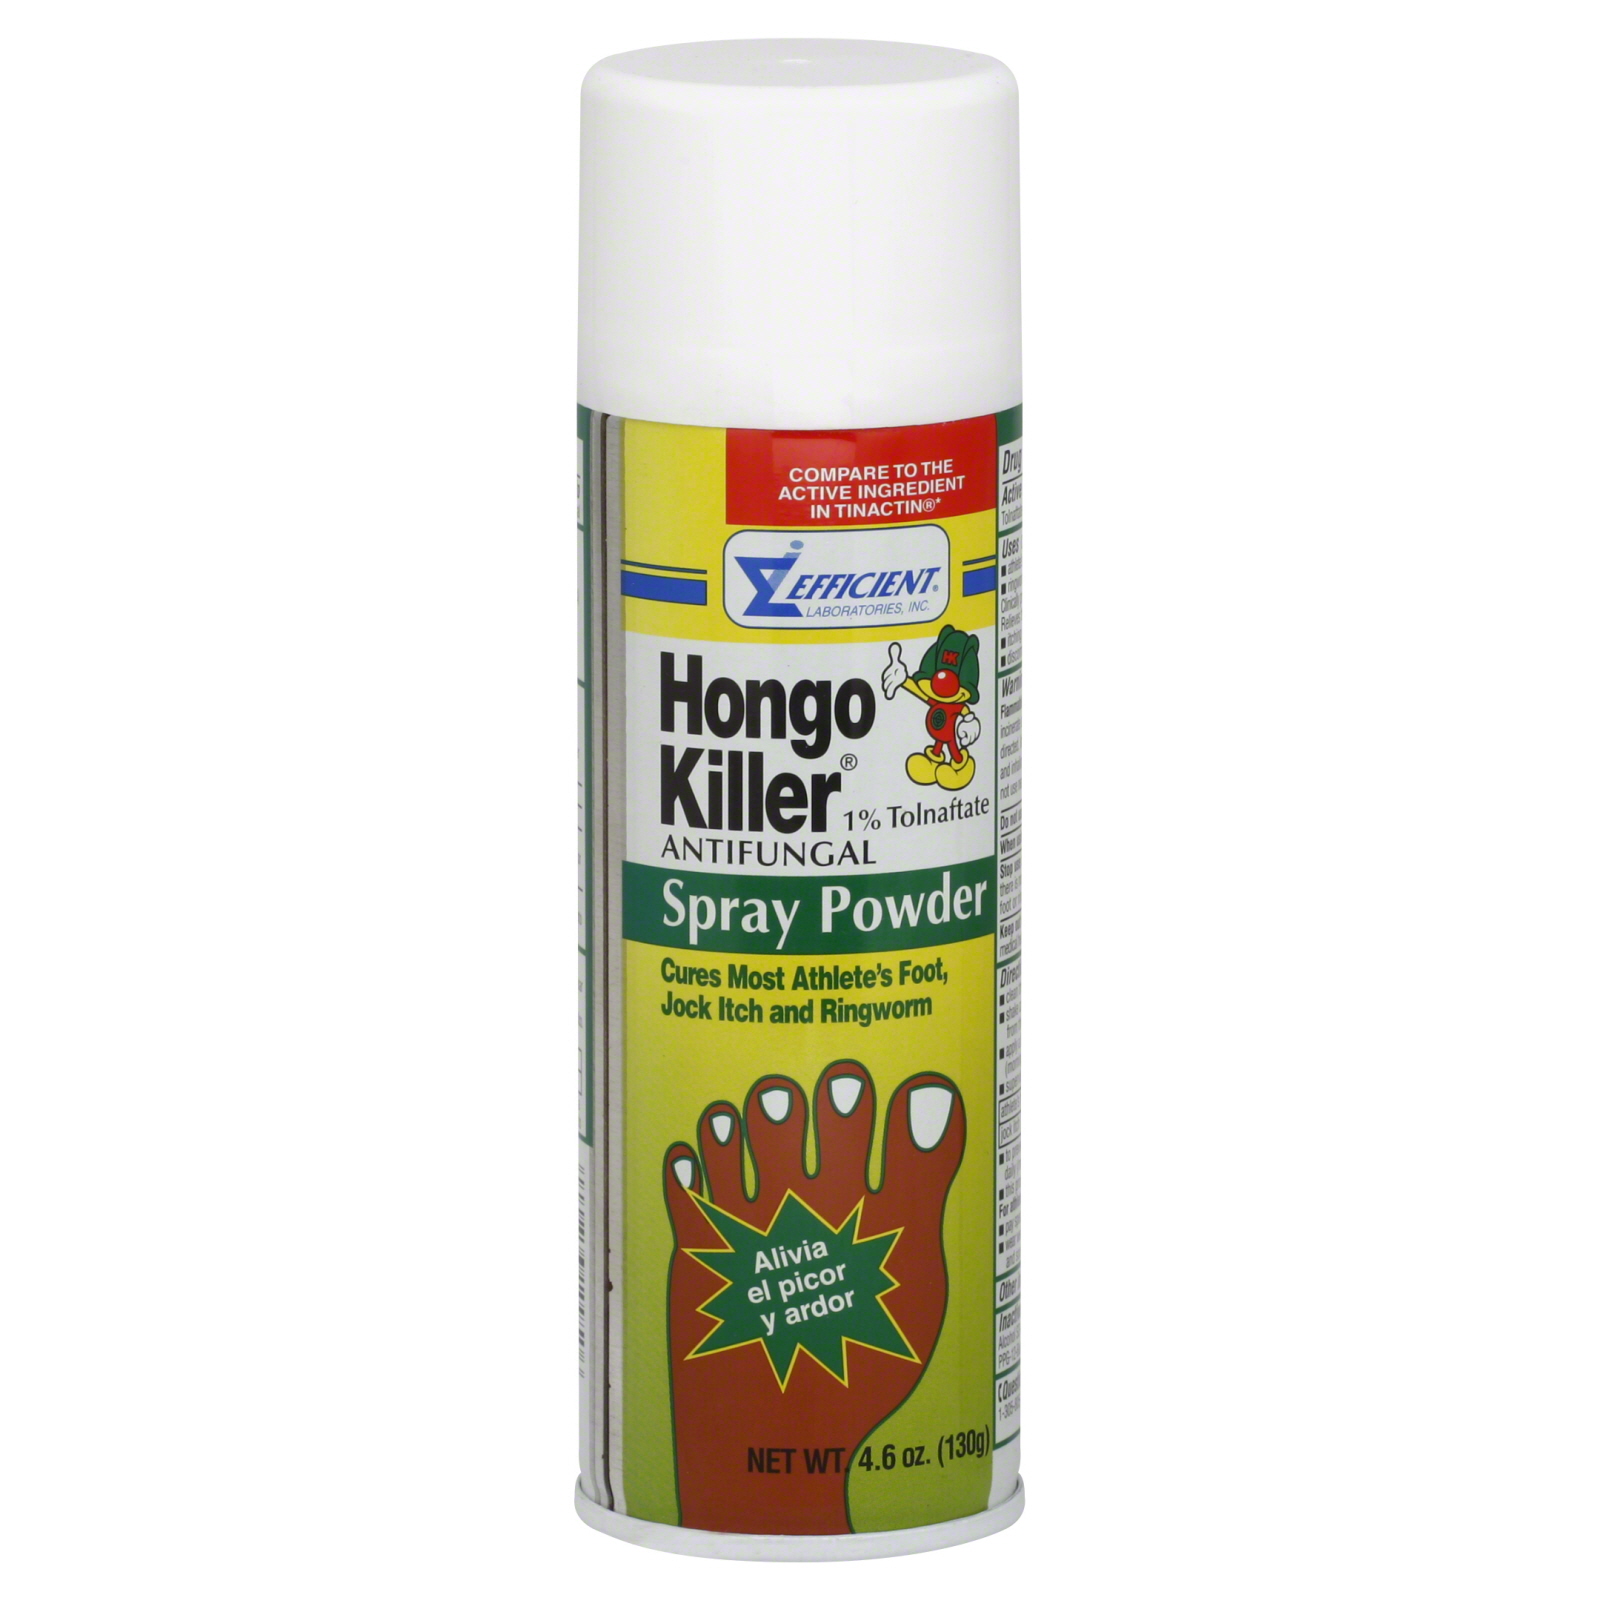 Hongo Killer Antifungal Spray Powder, 4.6 oz (130 g)